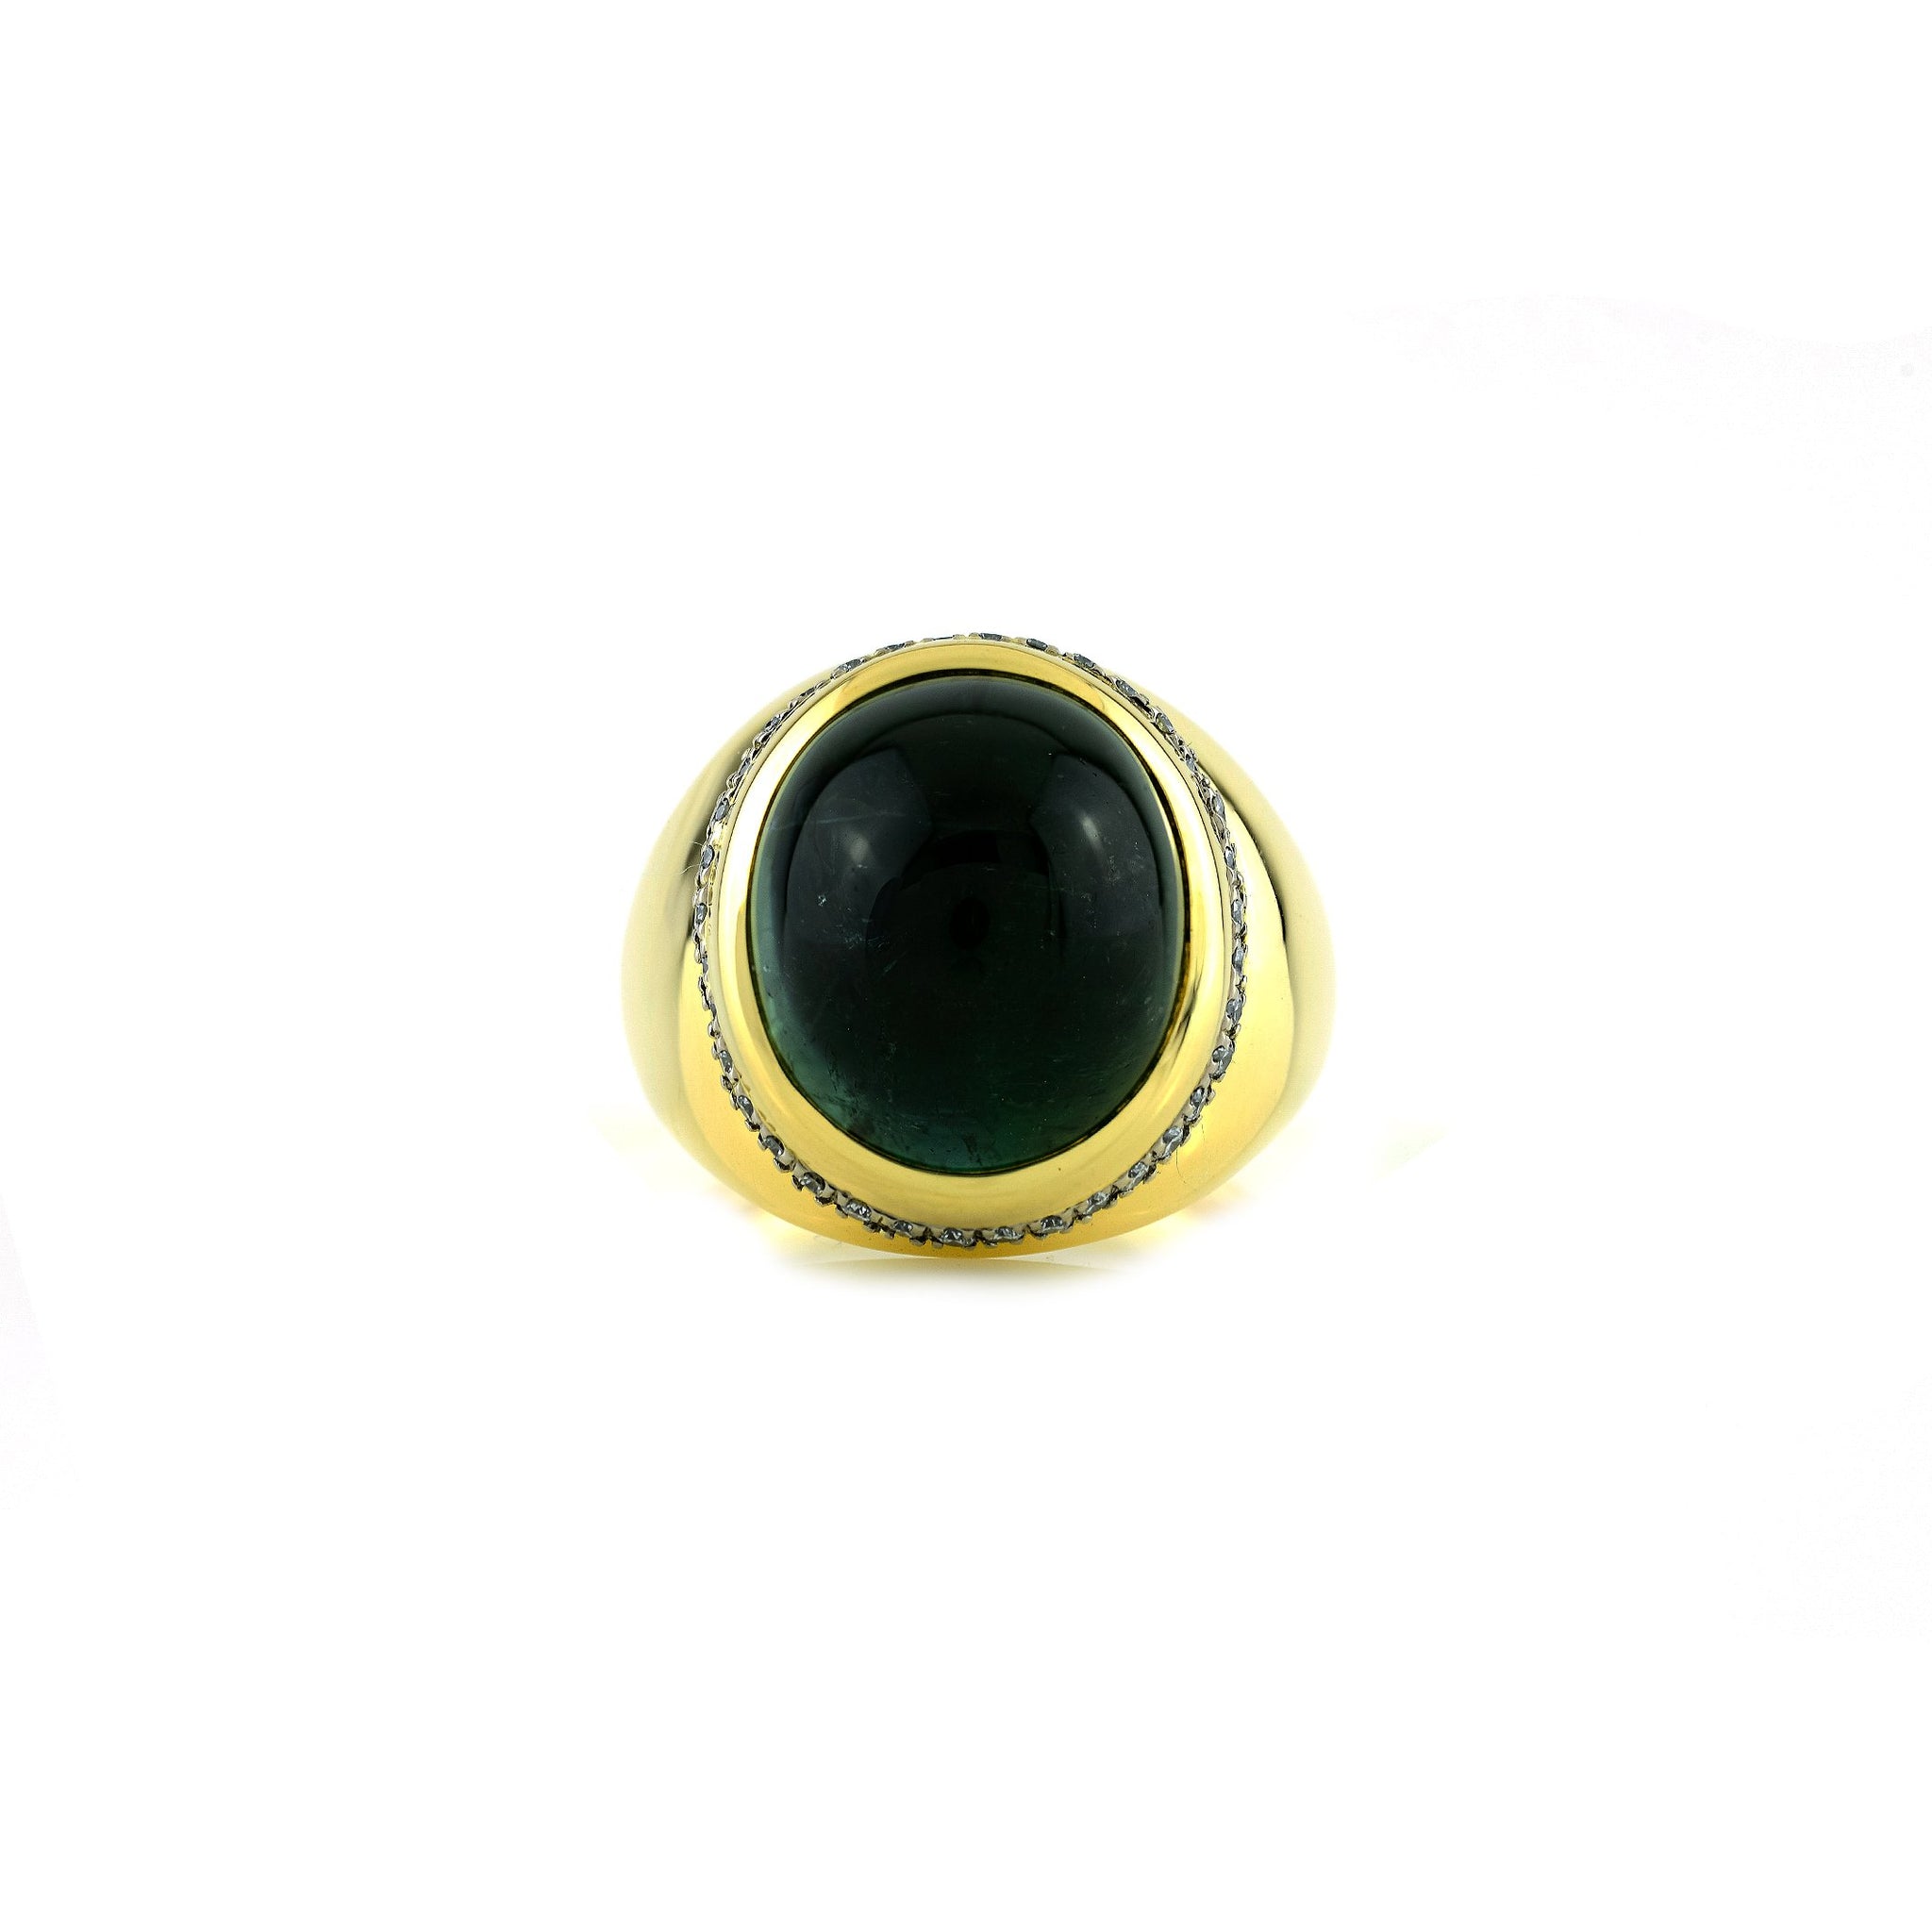 18ct Yellow and White Gold 12.62ct Green Tourmaline and Diamond Dress Ring